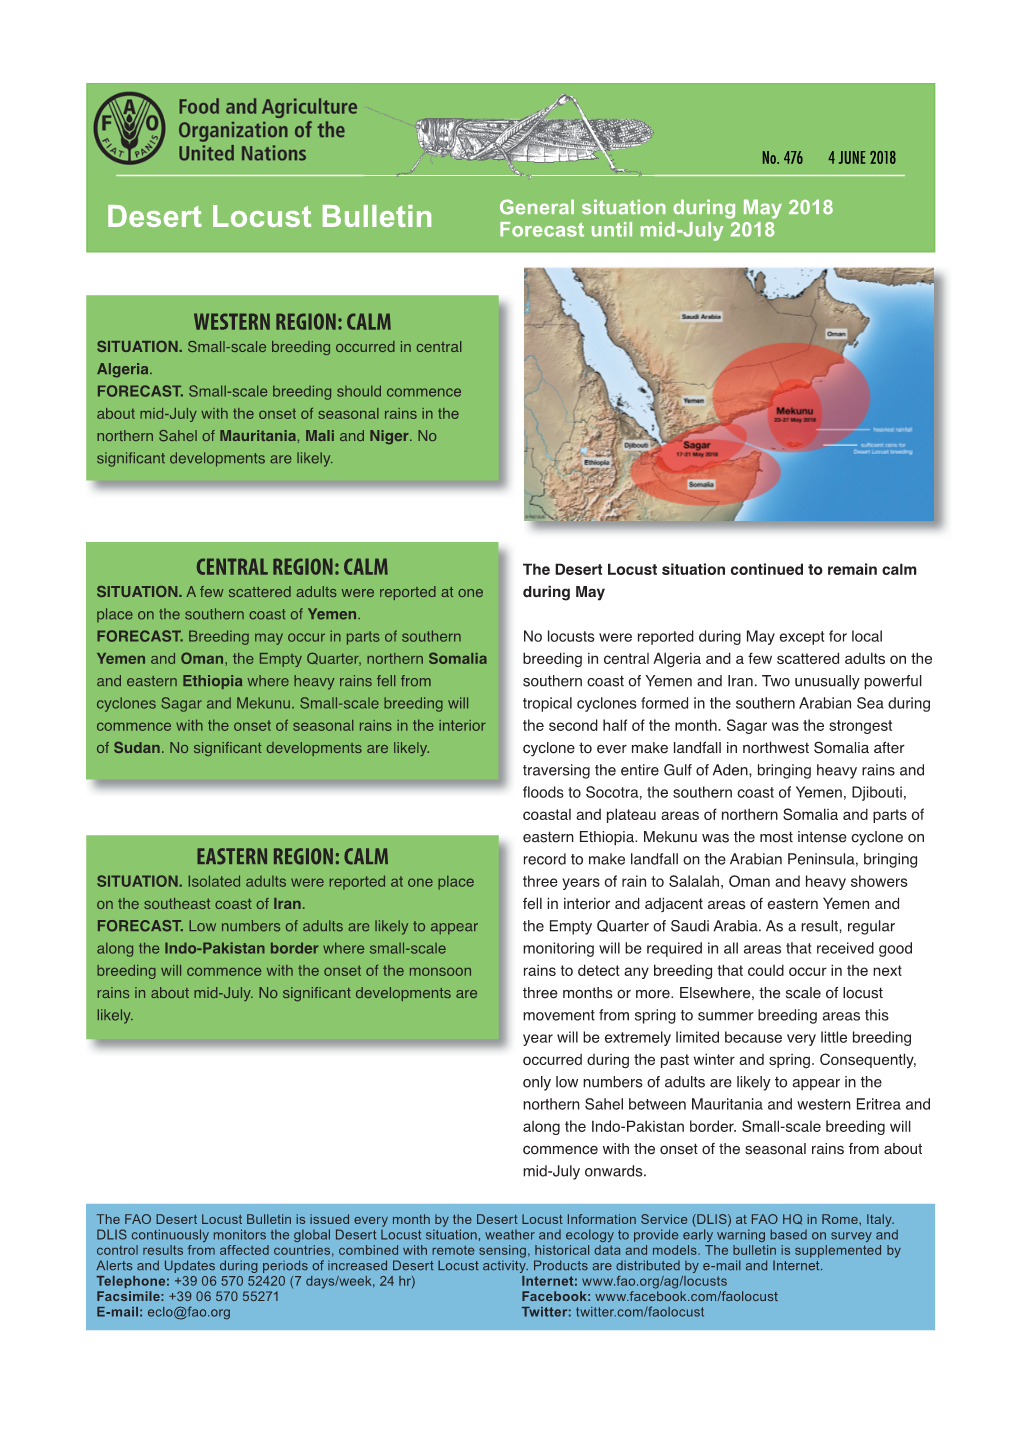 Desert Locust Bulletin Forecast Until Mid-July 2018